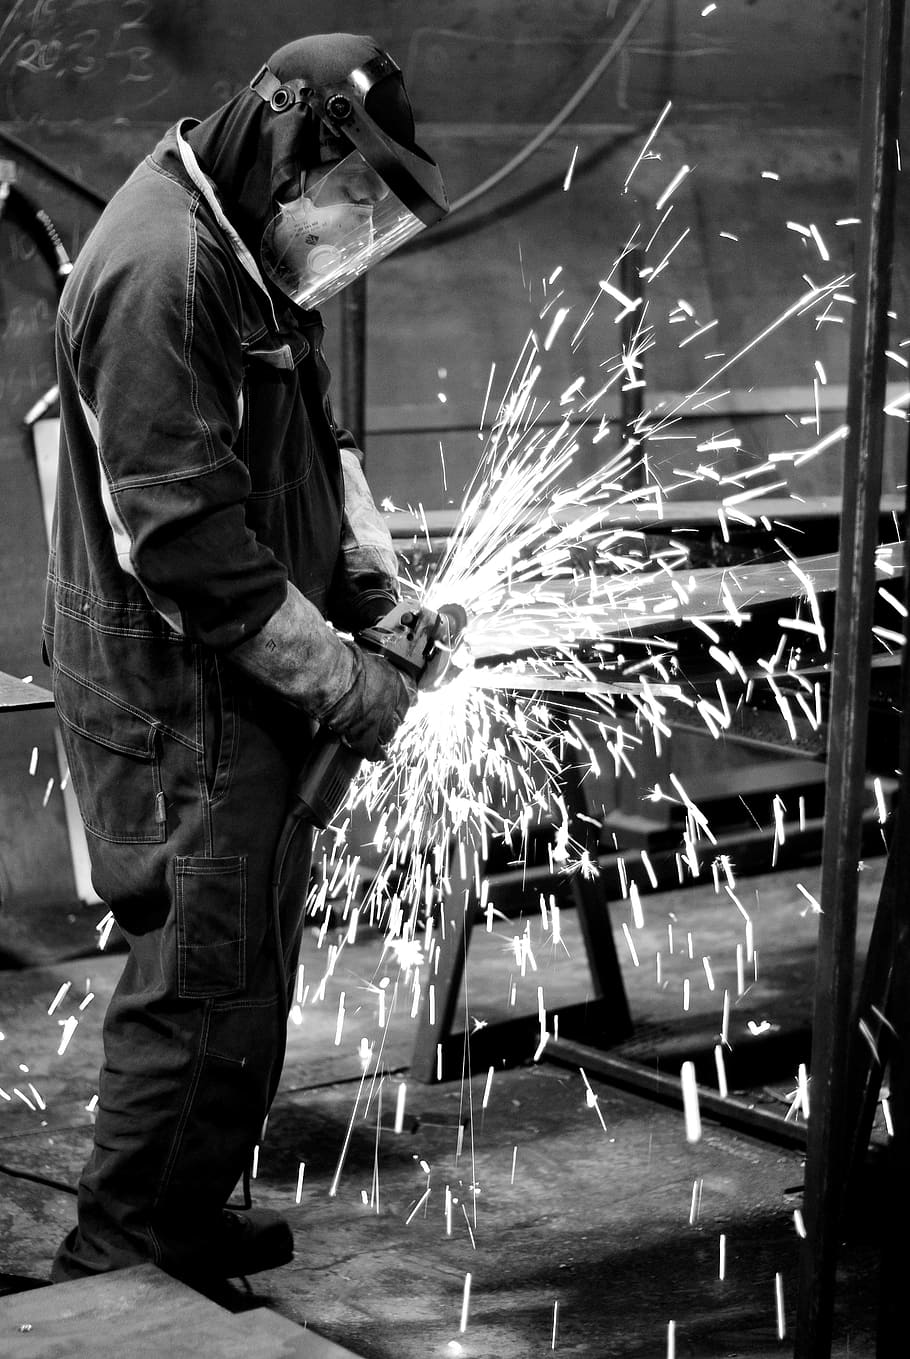 greyscale photography, person, using, hand tool, welding, industry, steel, mask, welder, engineering